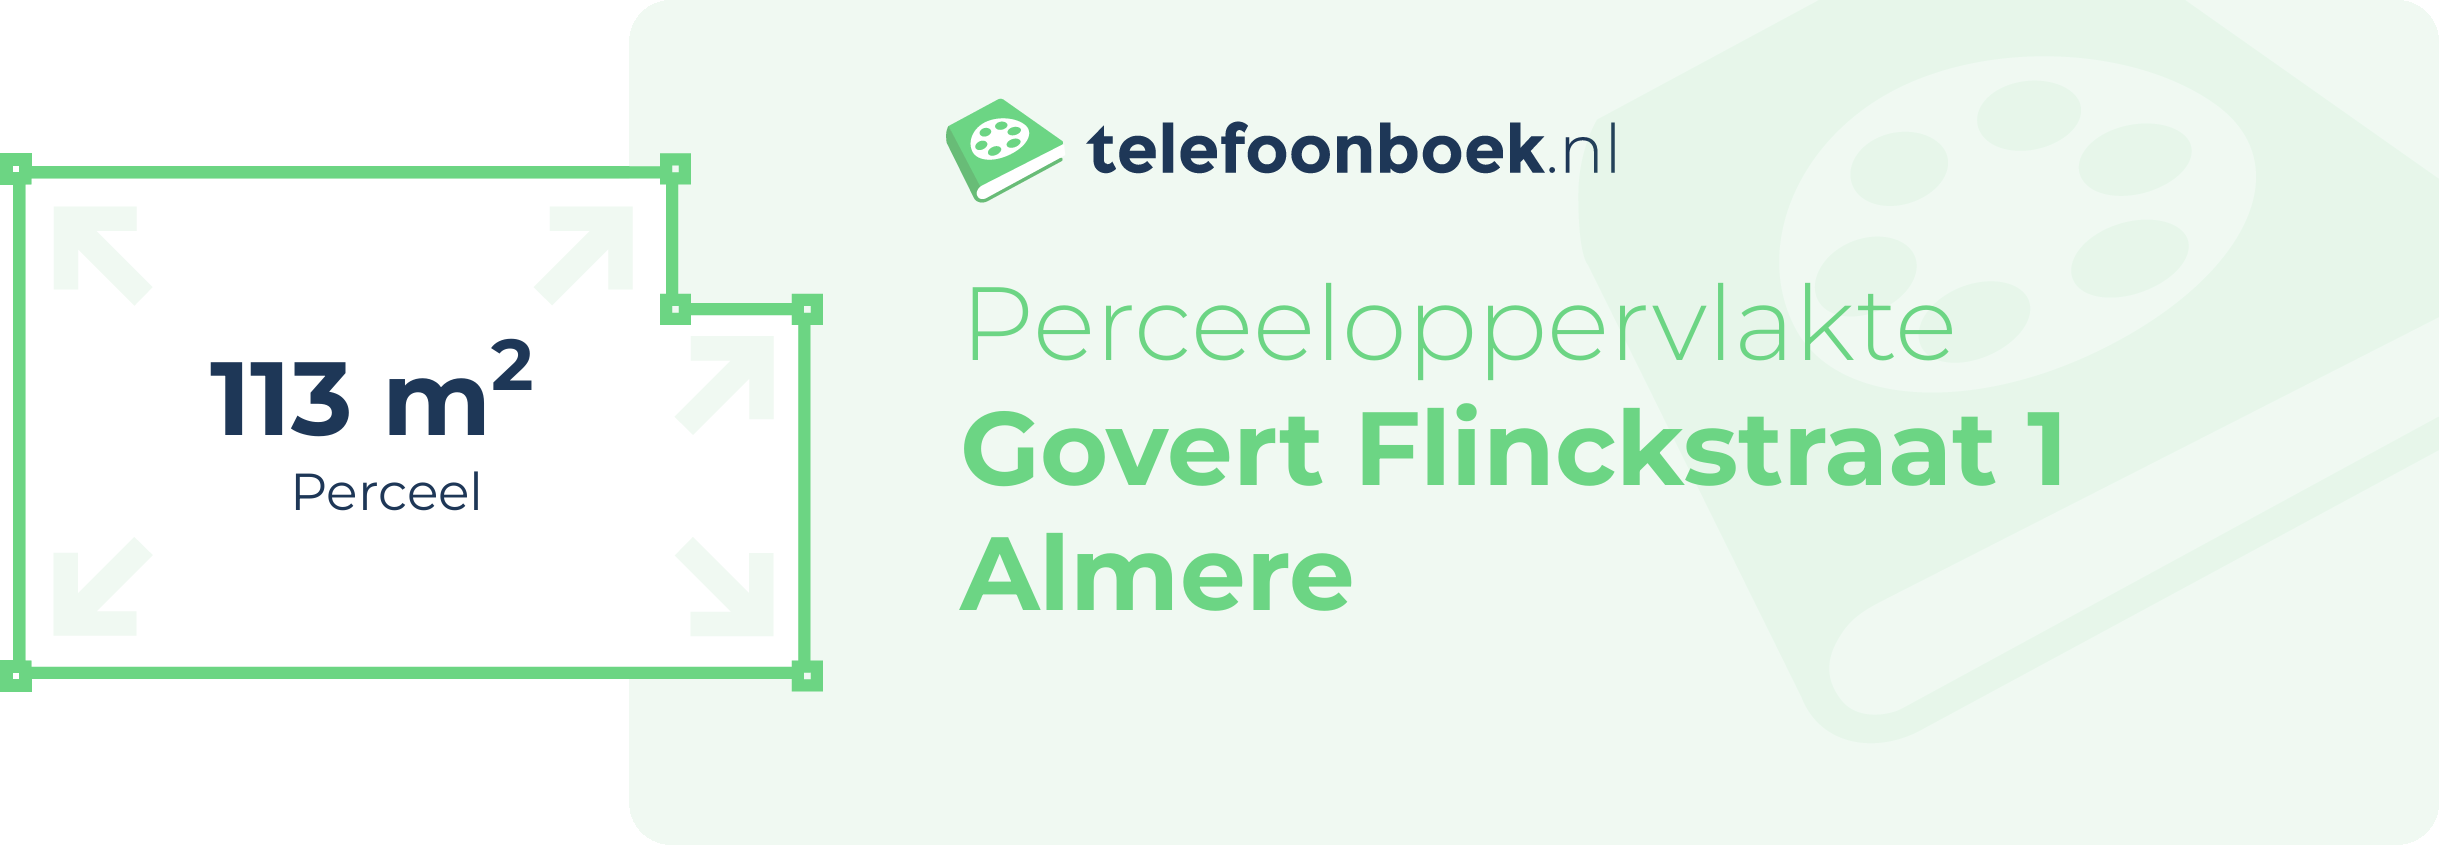 Perceeloppervlakte Govert Flinckstraat 1 Almere